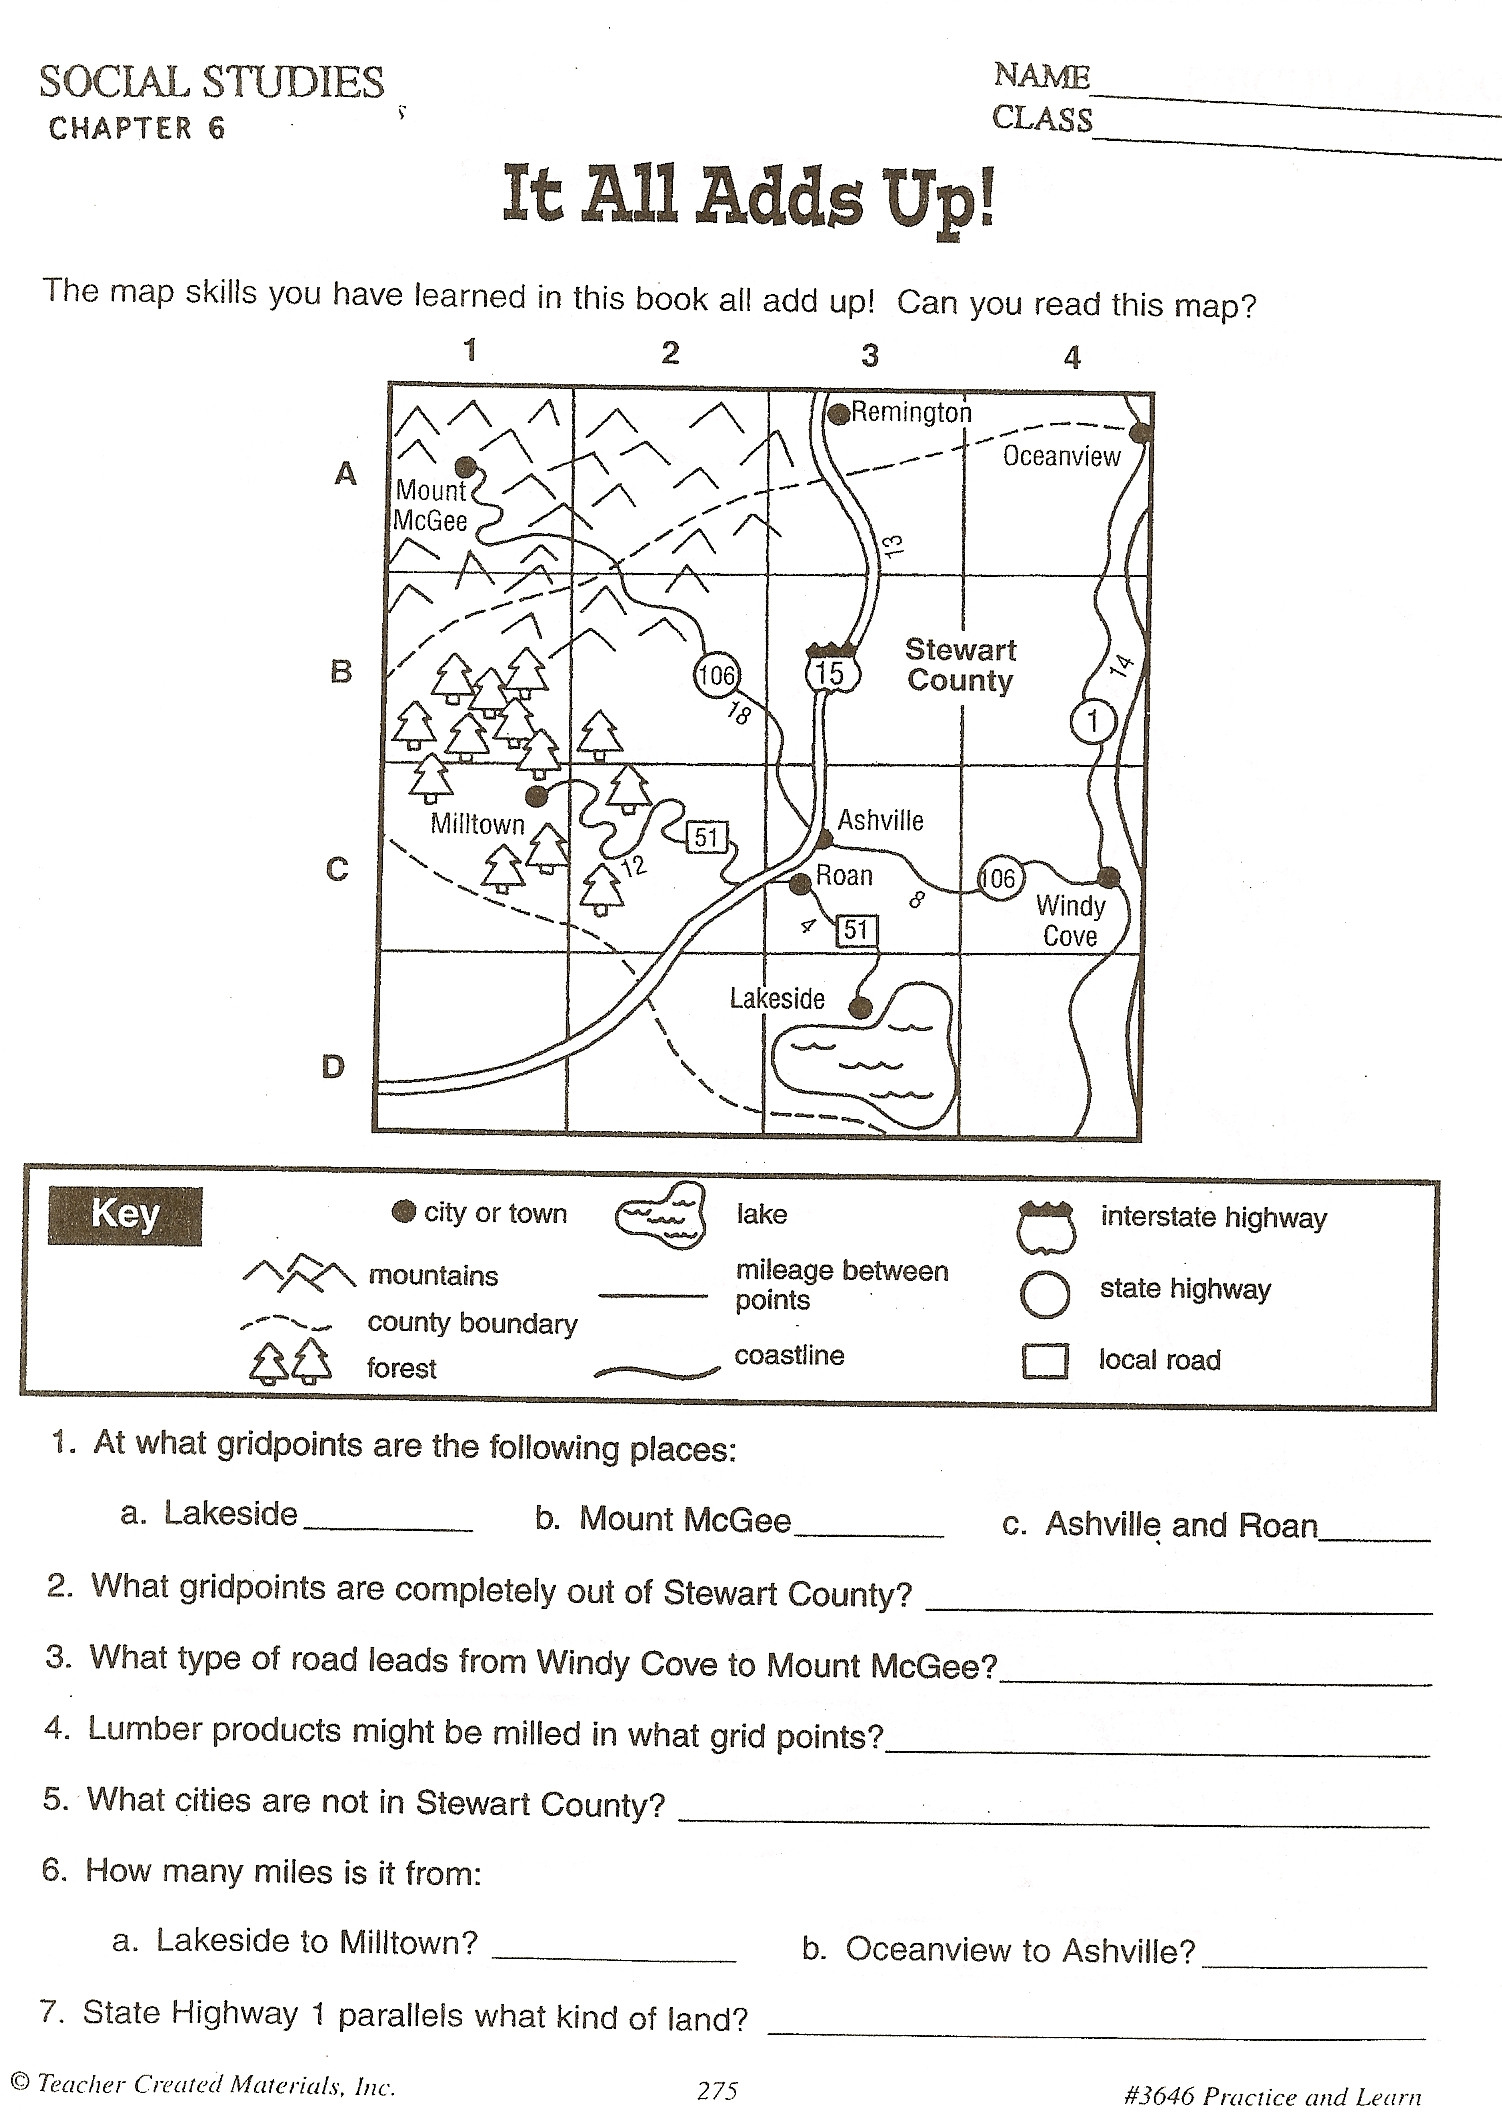 4th Grade Social Studies Worksheets For Free Math Worksheet For Kids 